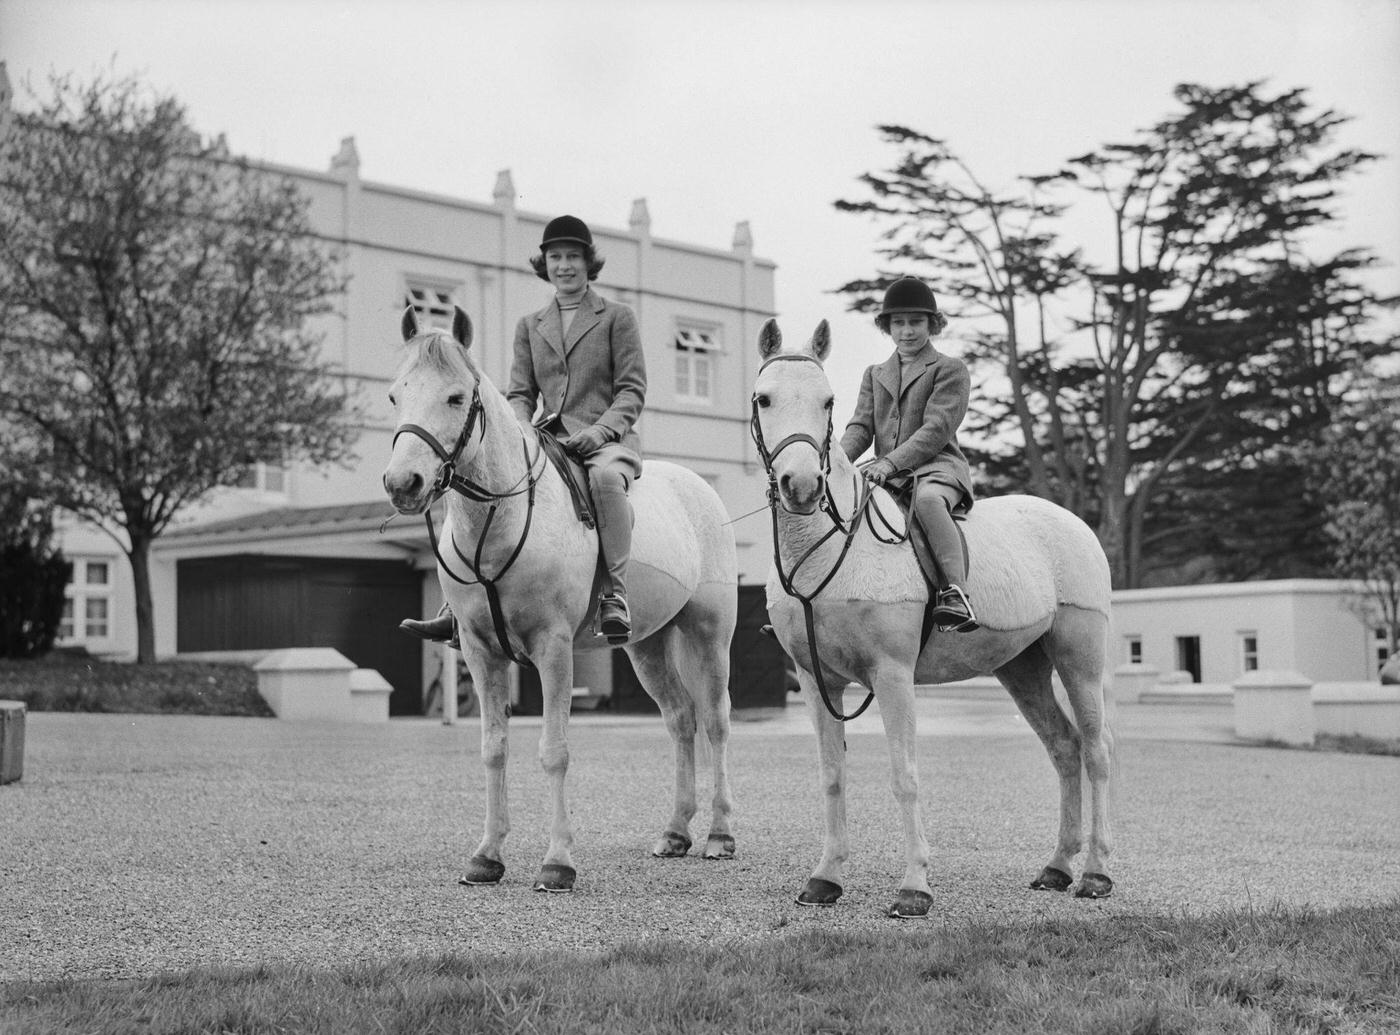 The Royal Princesses Elizabeth and Margaret riding horses, UK, 1940.